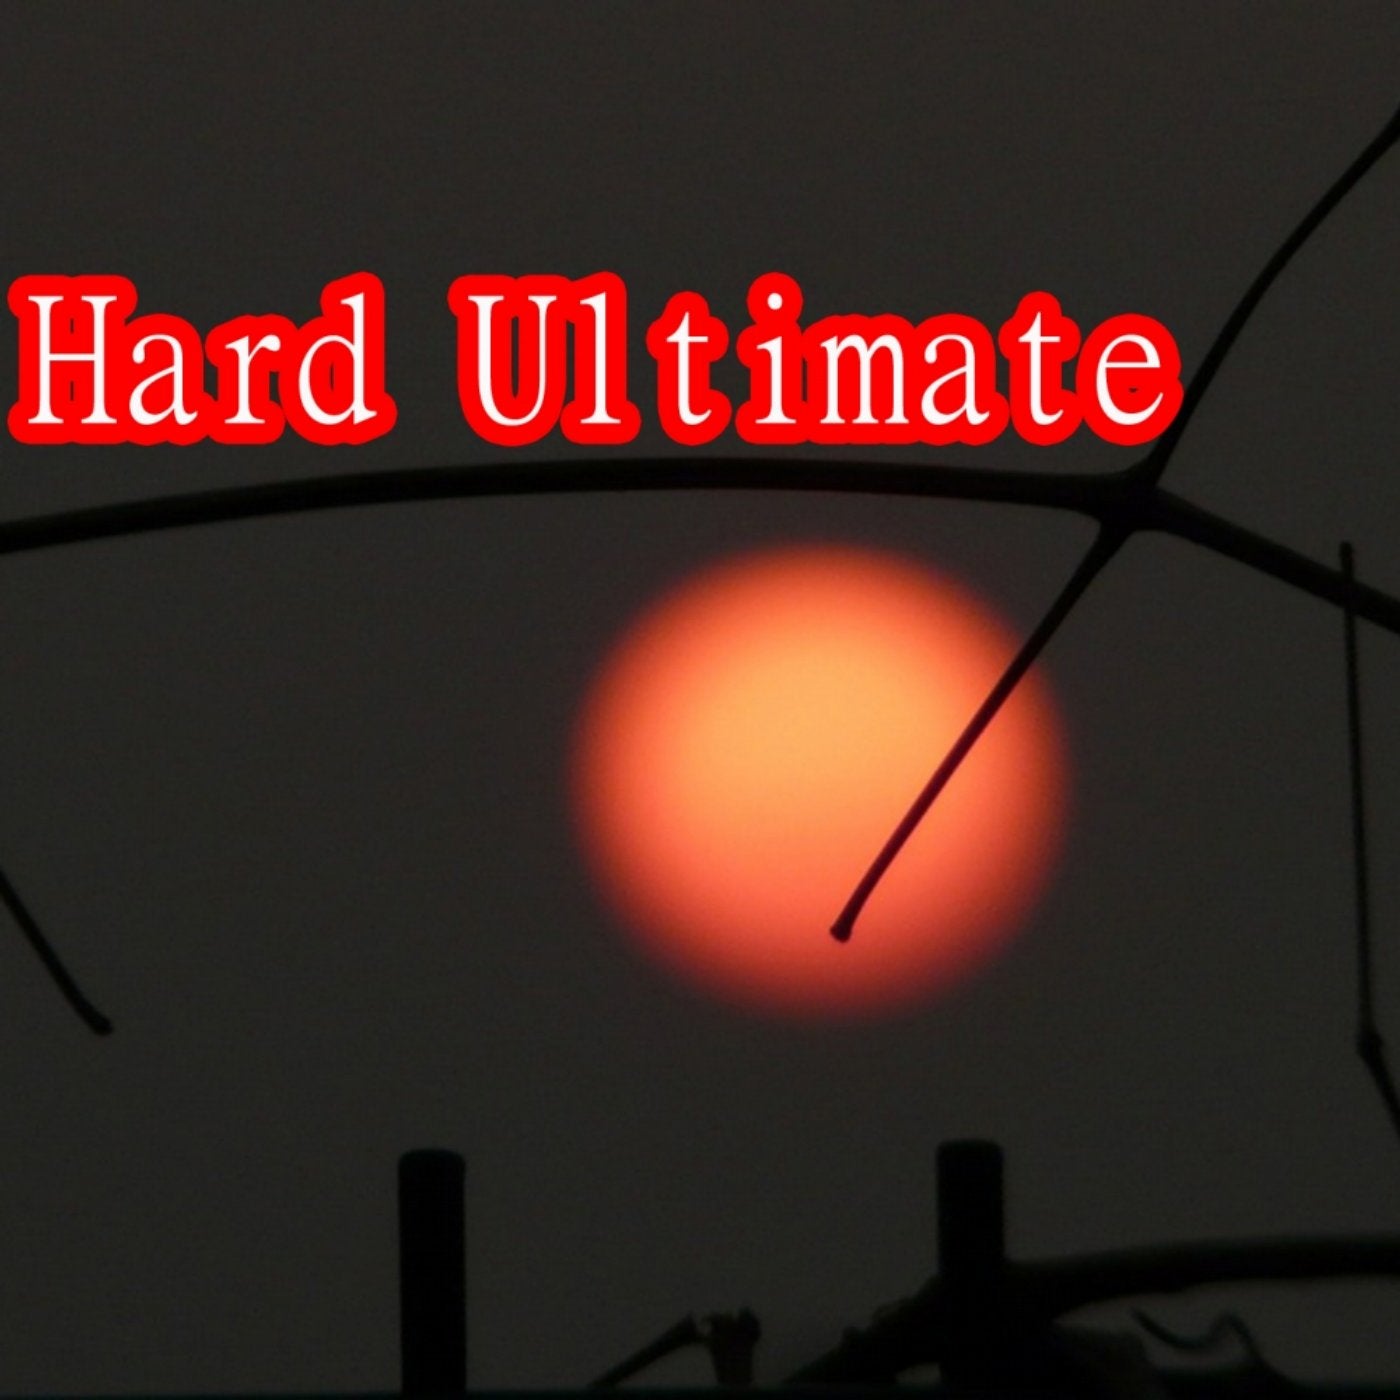 Hard Ultimate